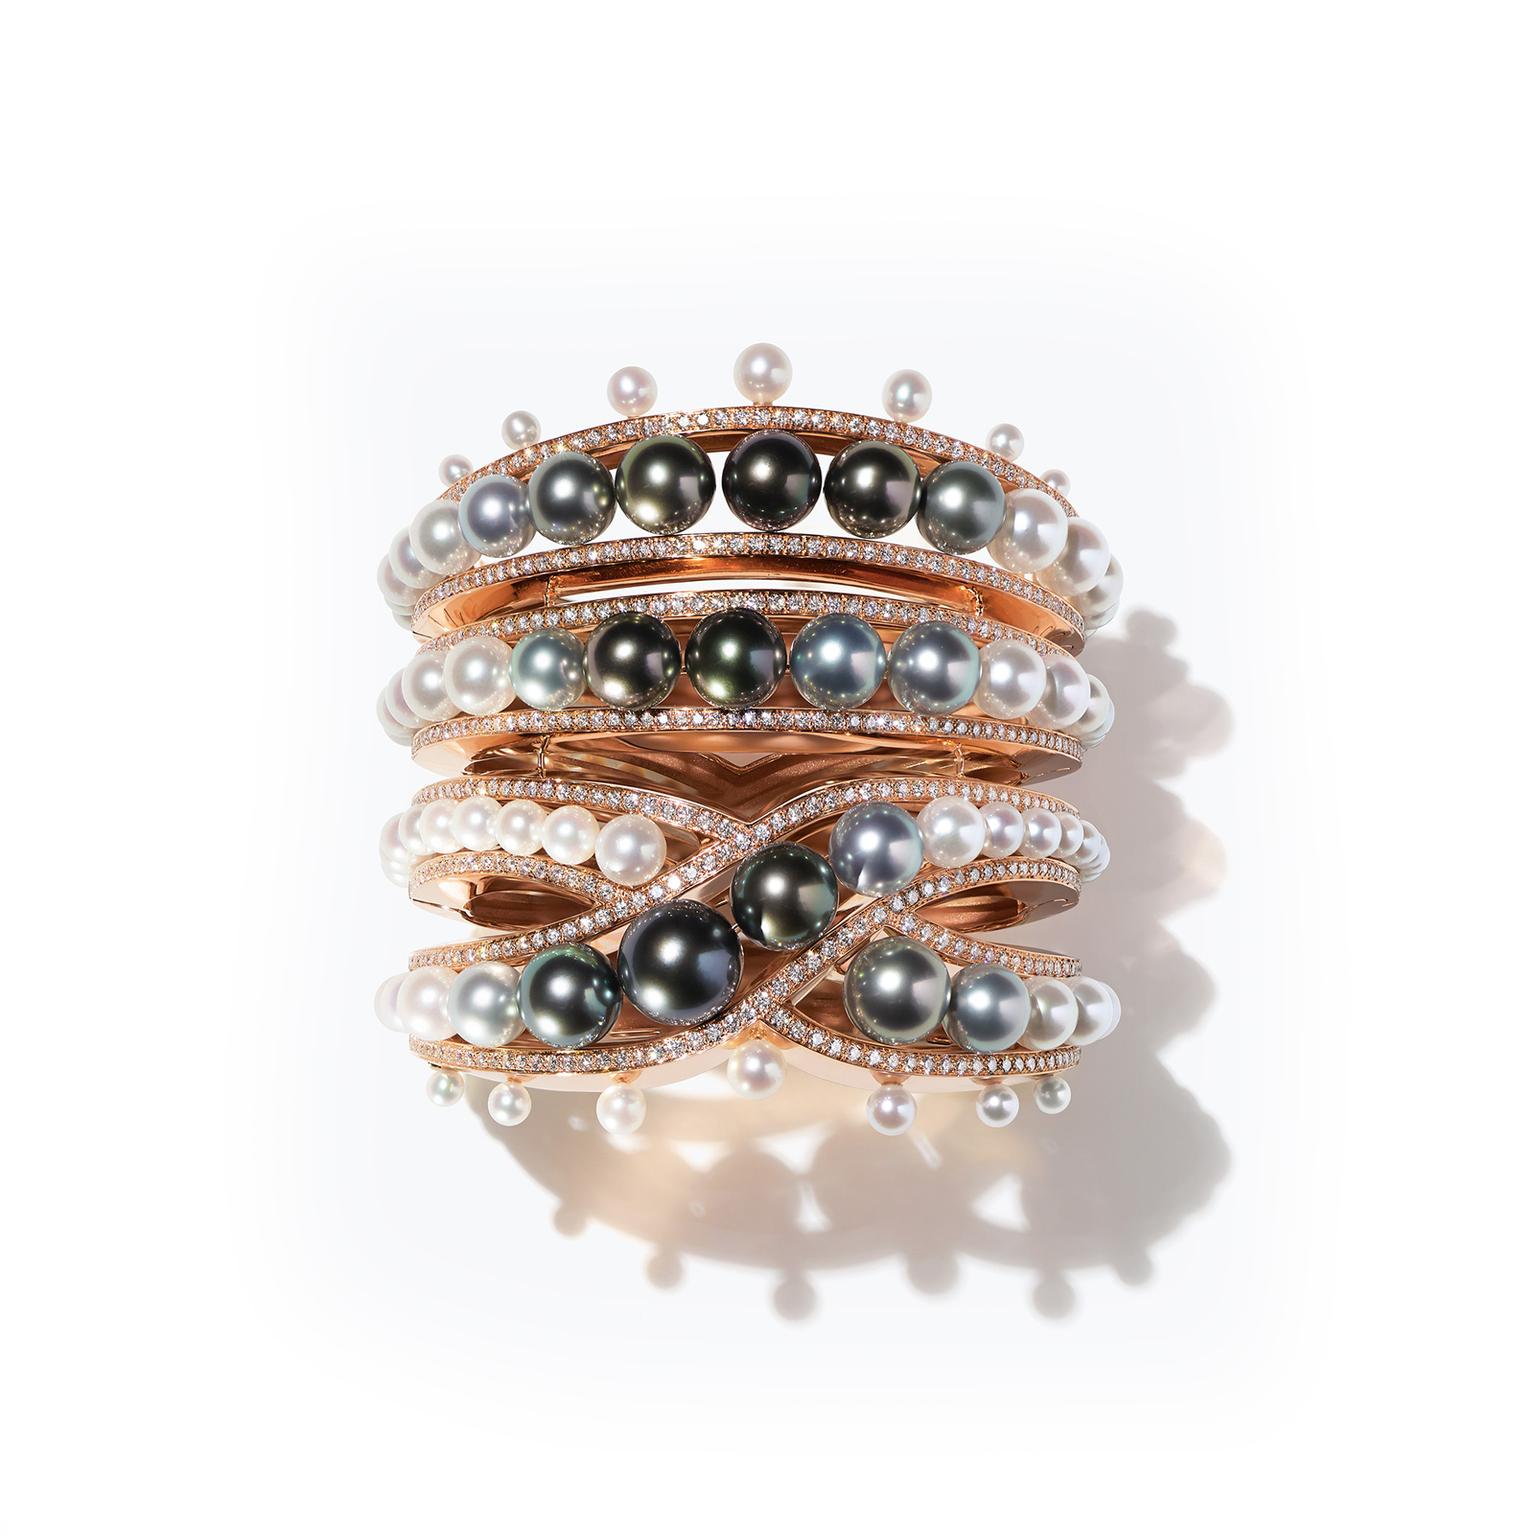 Hermès Ombres et Lumière pearl bracelet from the HB-IV Continuum collection